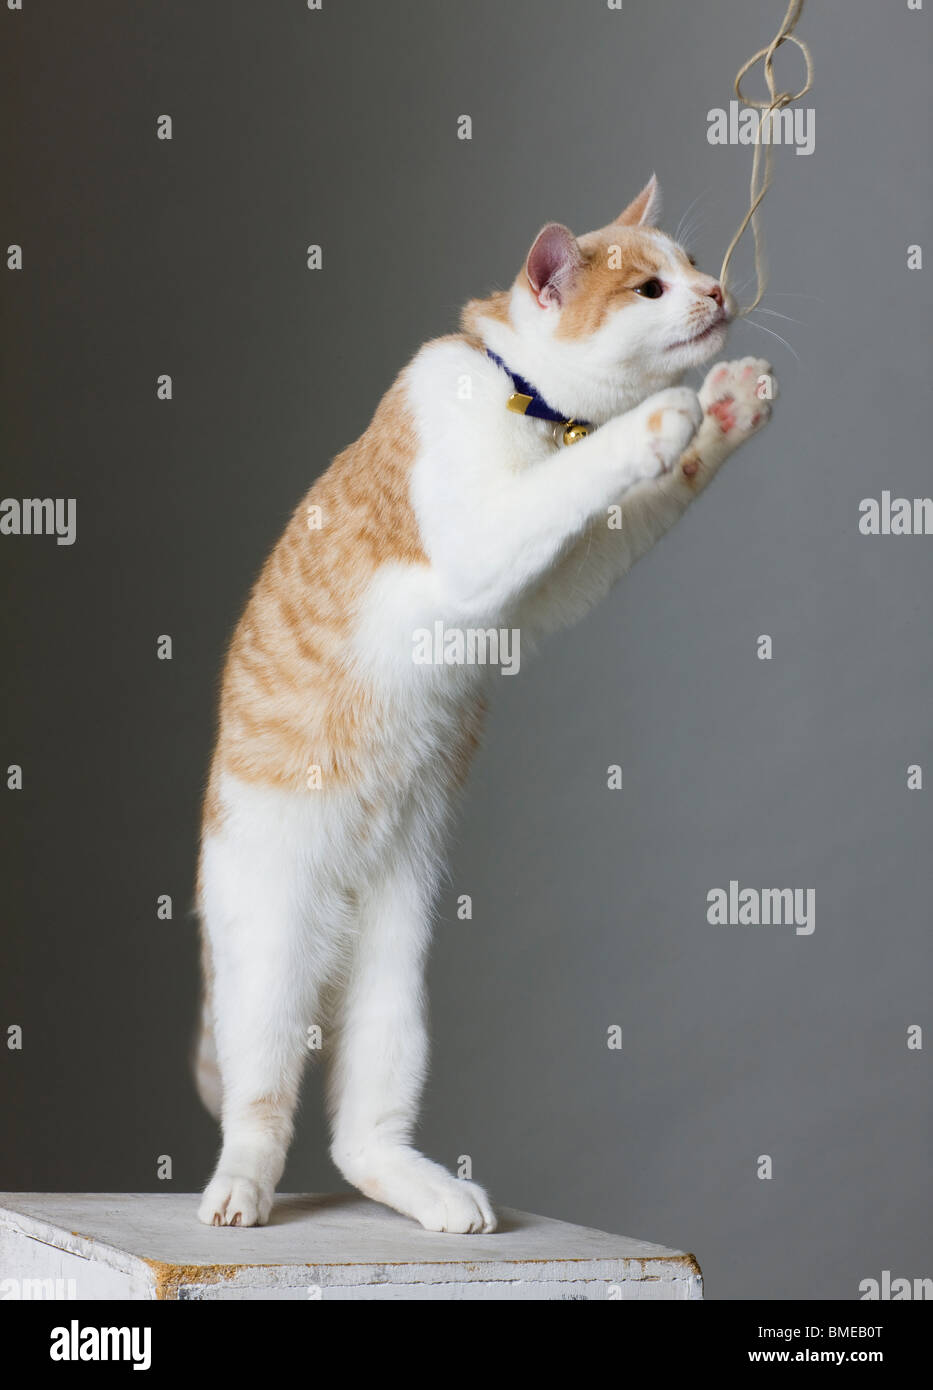 Cat reaching towards string Stock Photo